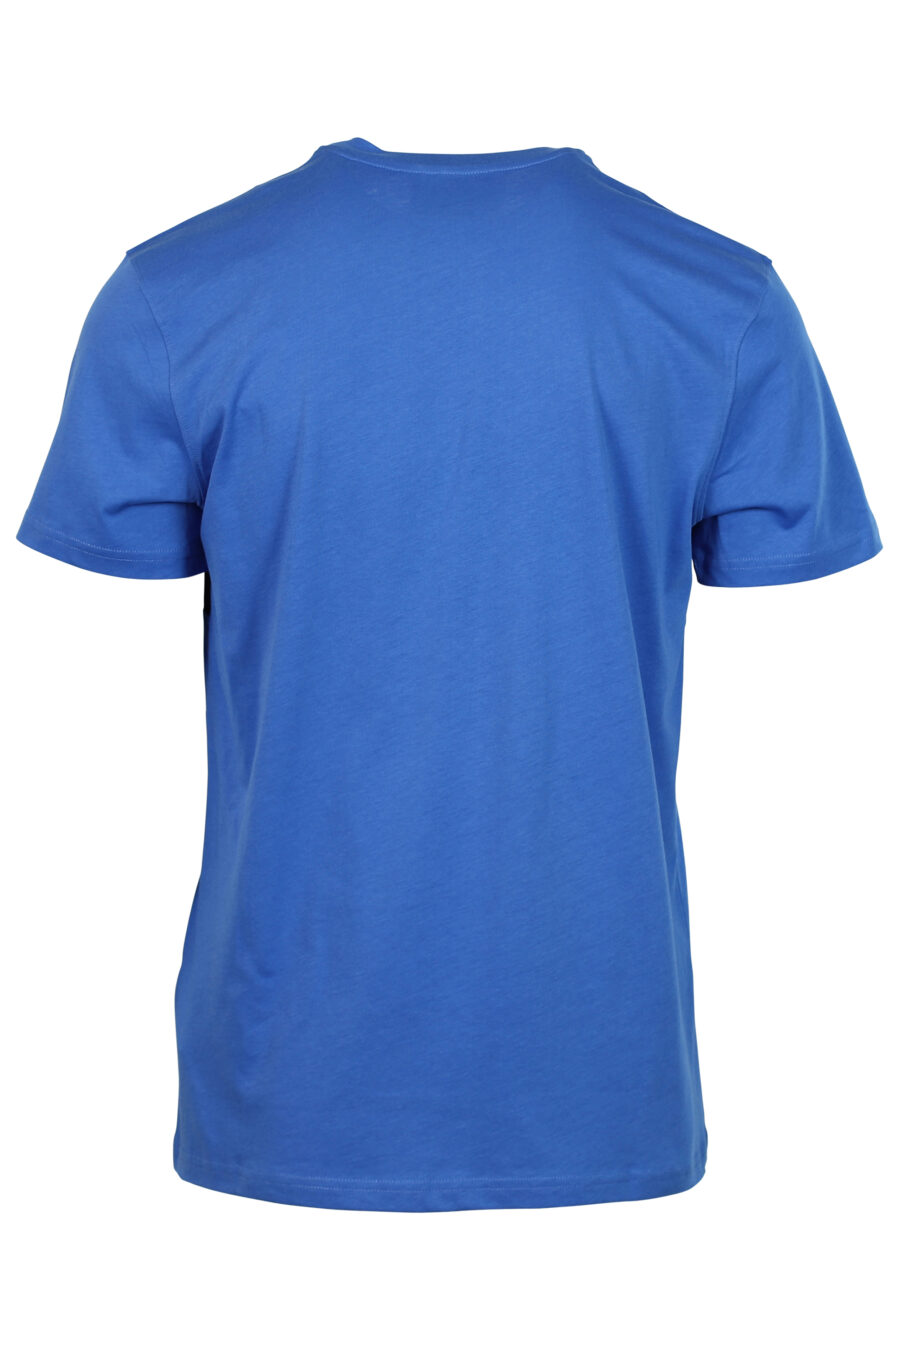 Blue T-shirt with black stripe logo - 667112834116 2